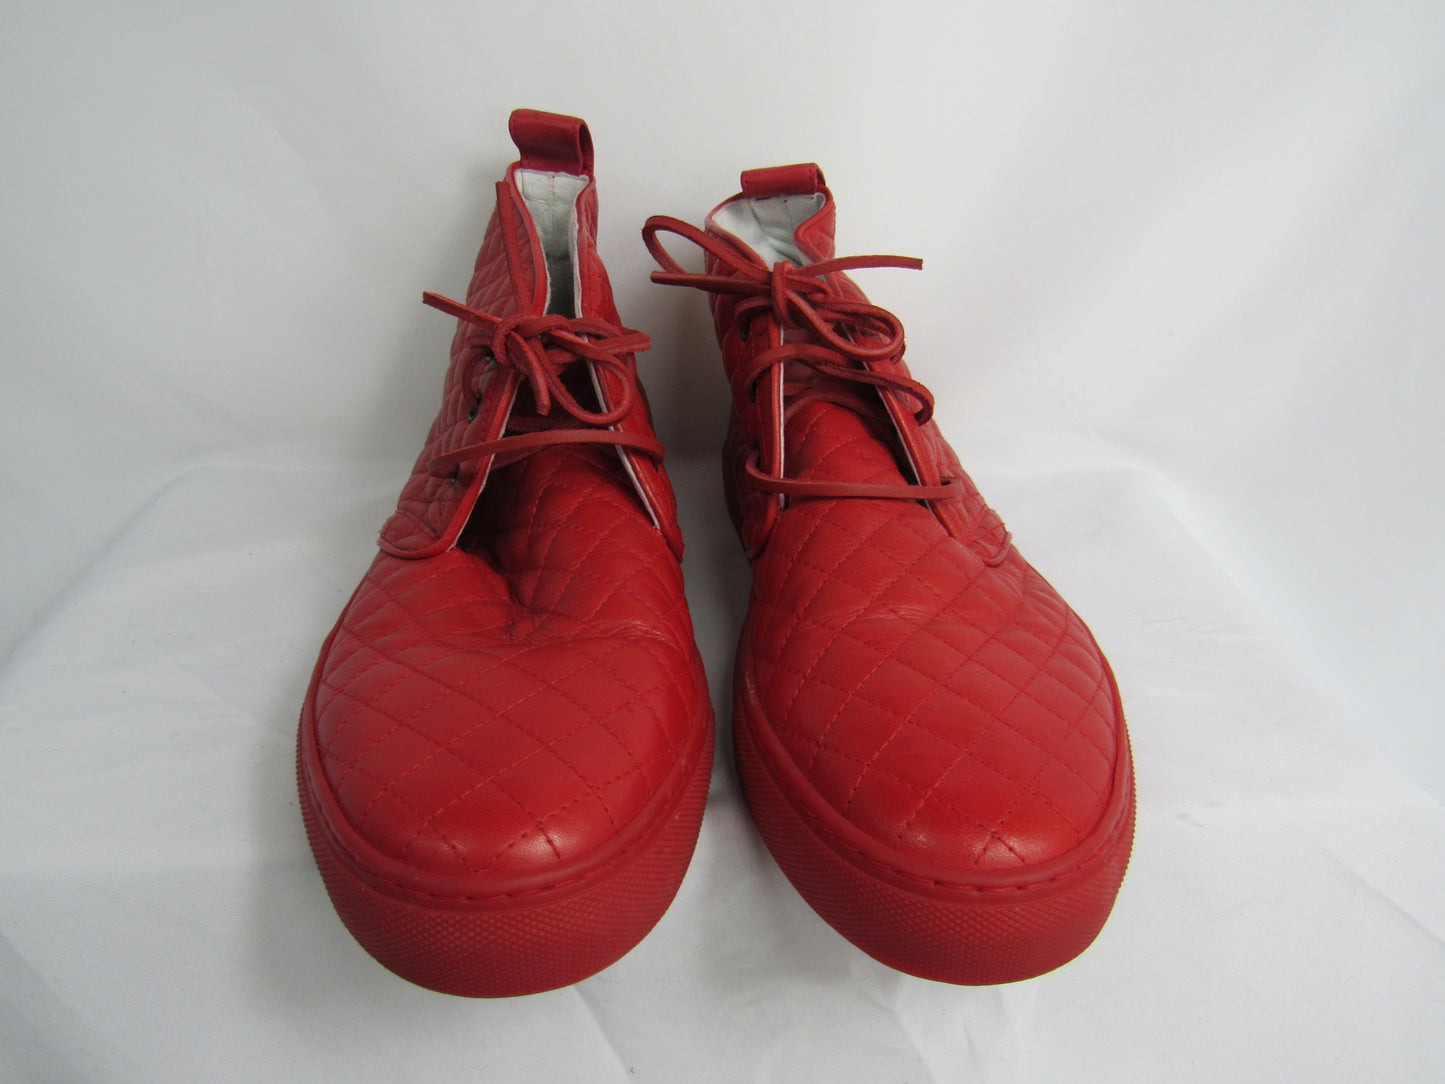 DEL TOROS Sneakers - Size 11